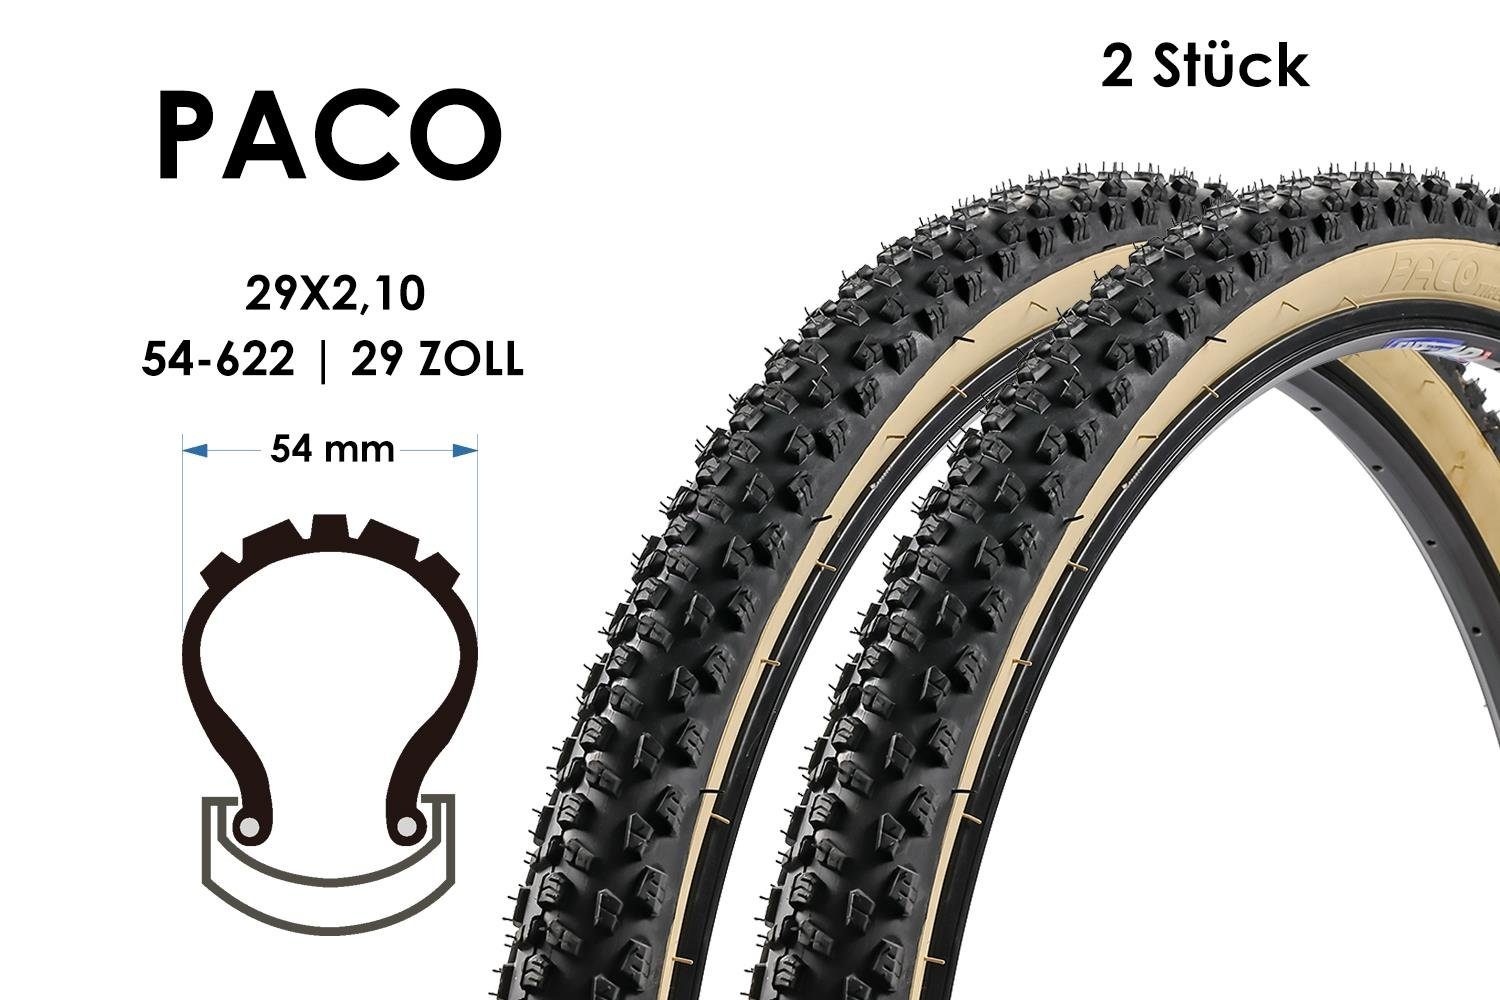 PACO Paco MTB 2 29x2.10 Fahrrad Reifen 29 Zoll Fahrradreifen Stück